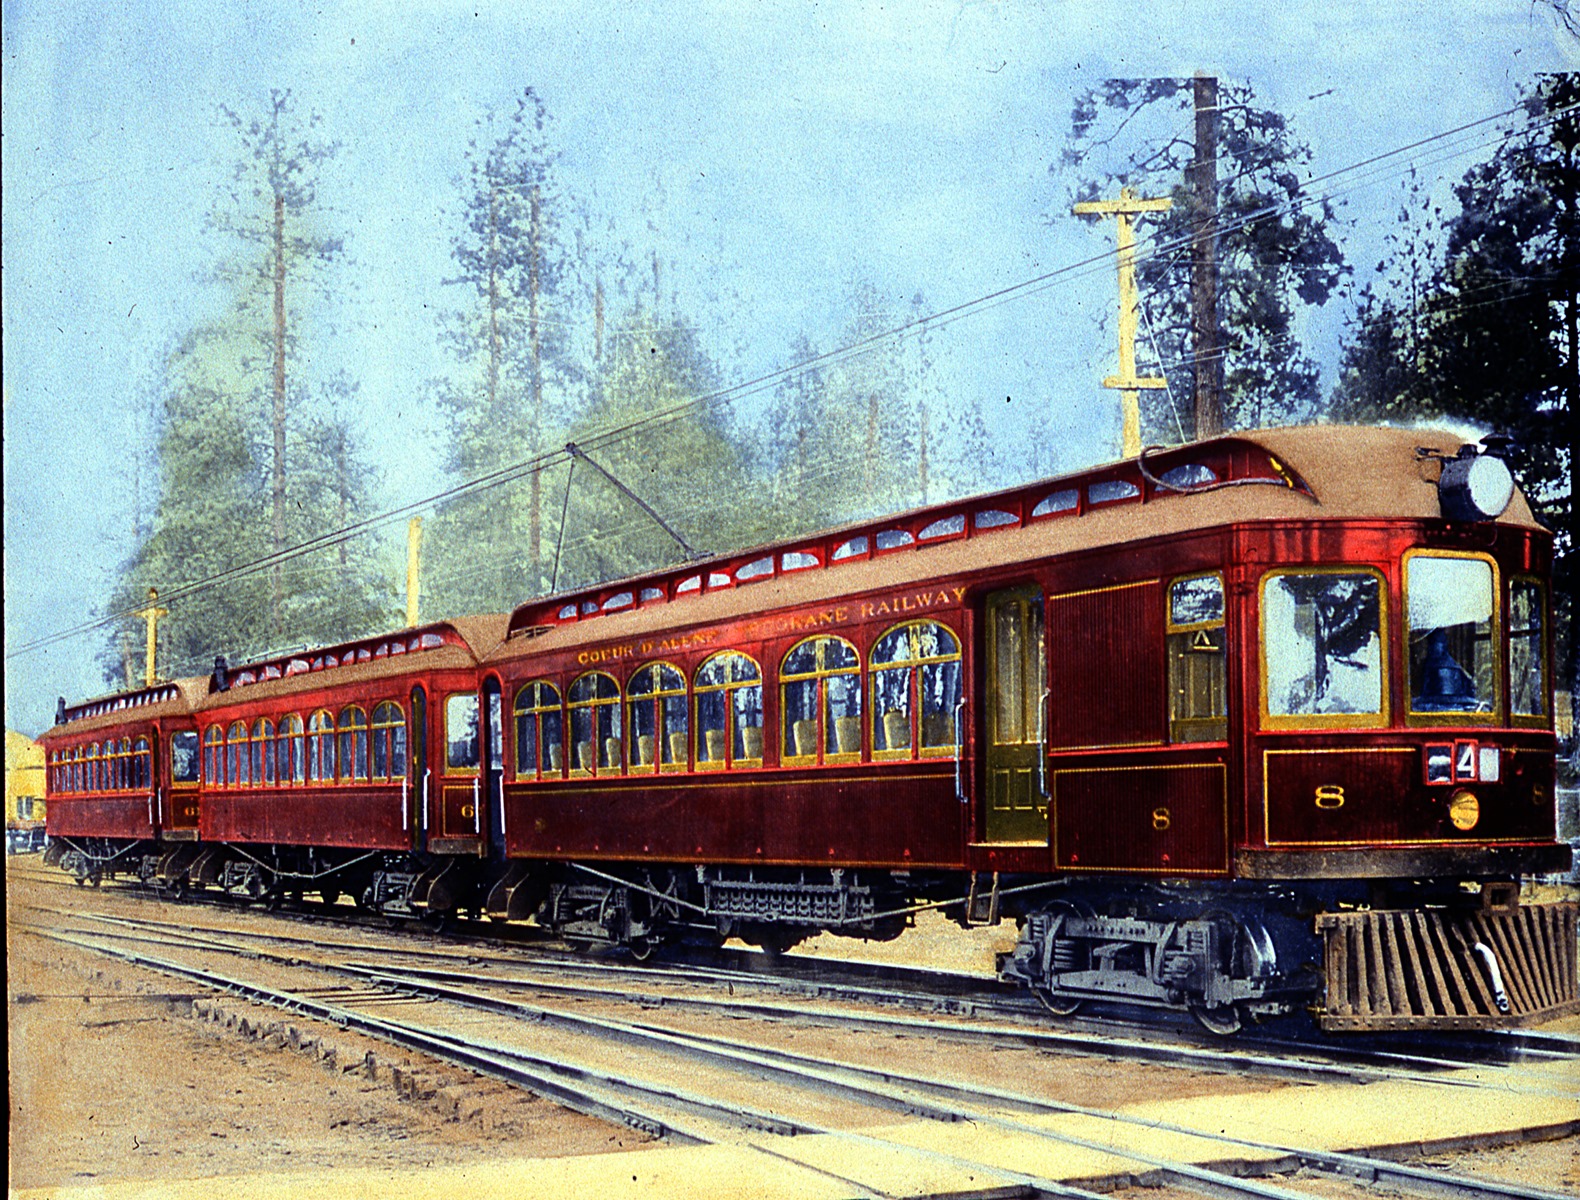 Coeur d'Alene and Spokane Railway car 8